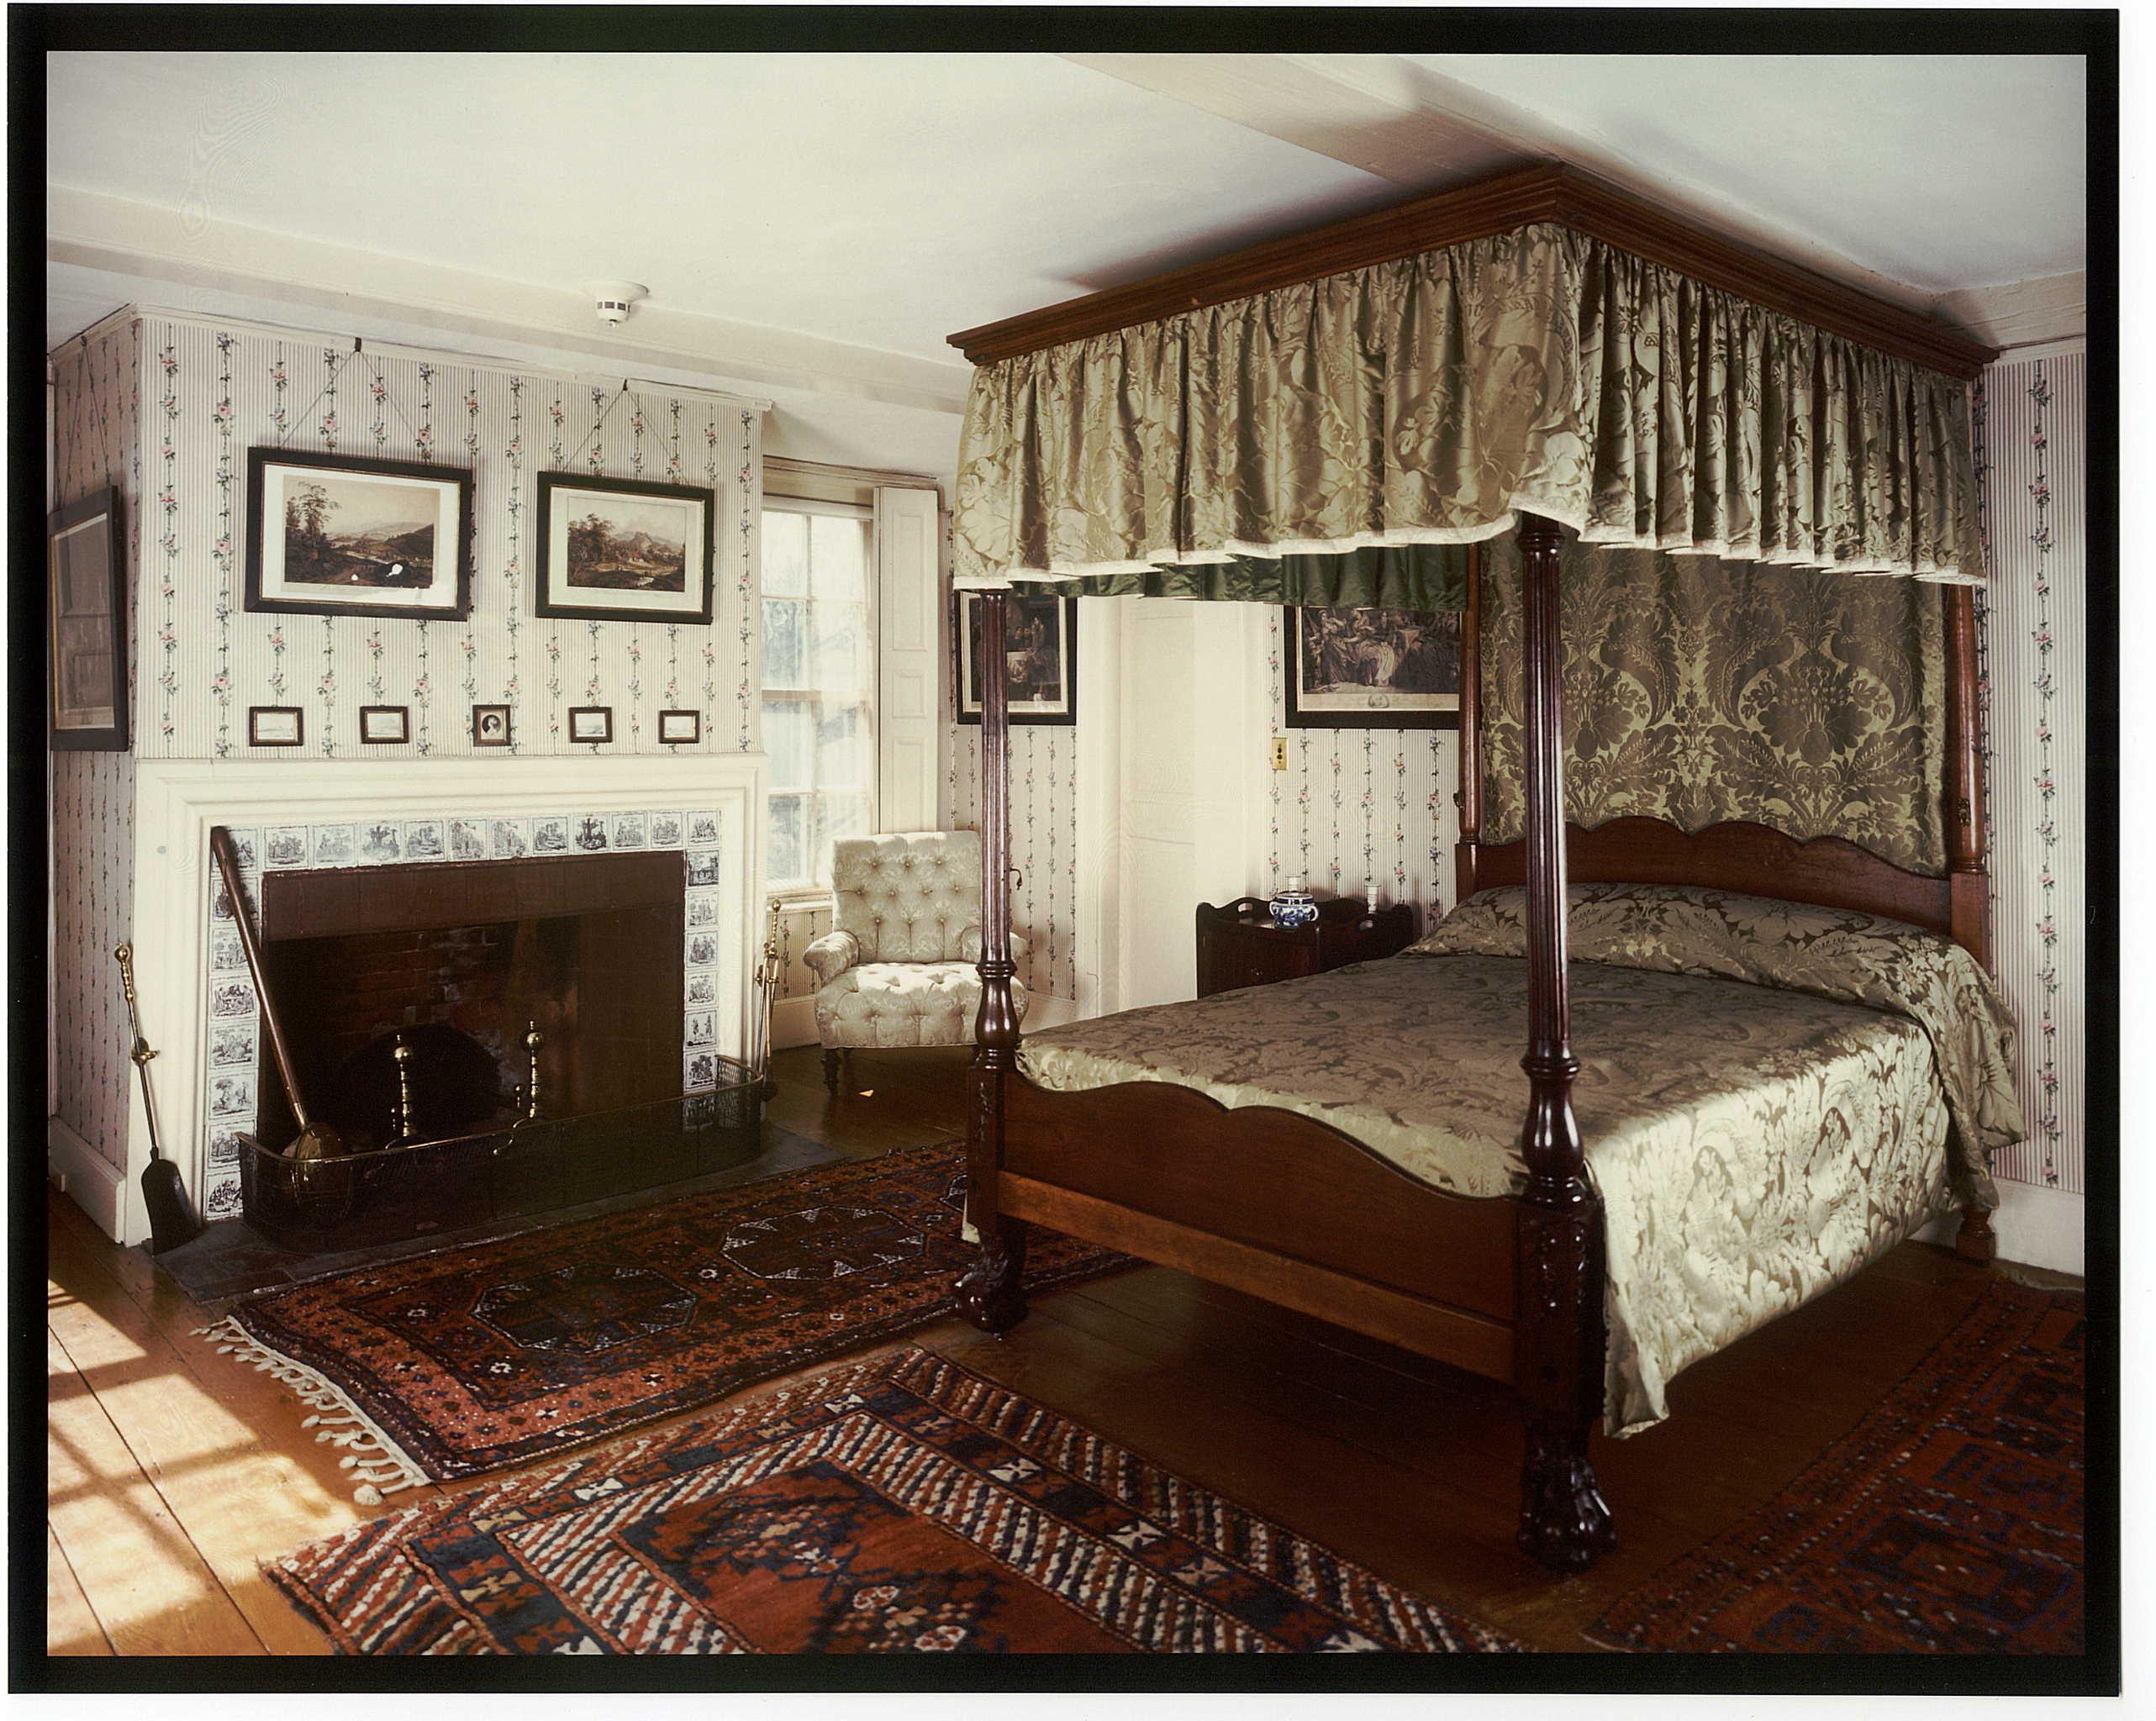 The bedroom of John and Abigail Adams. (NPS)